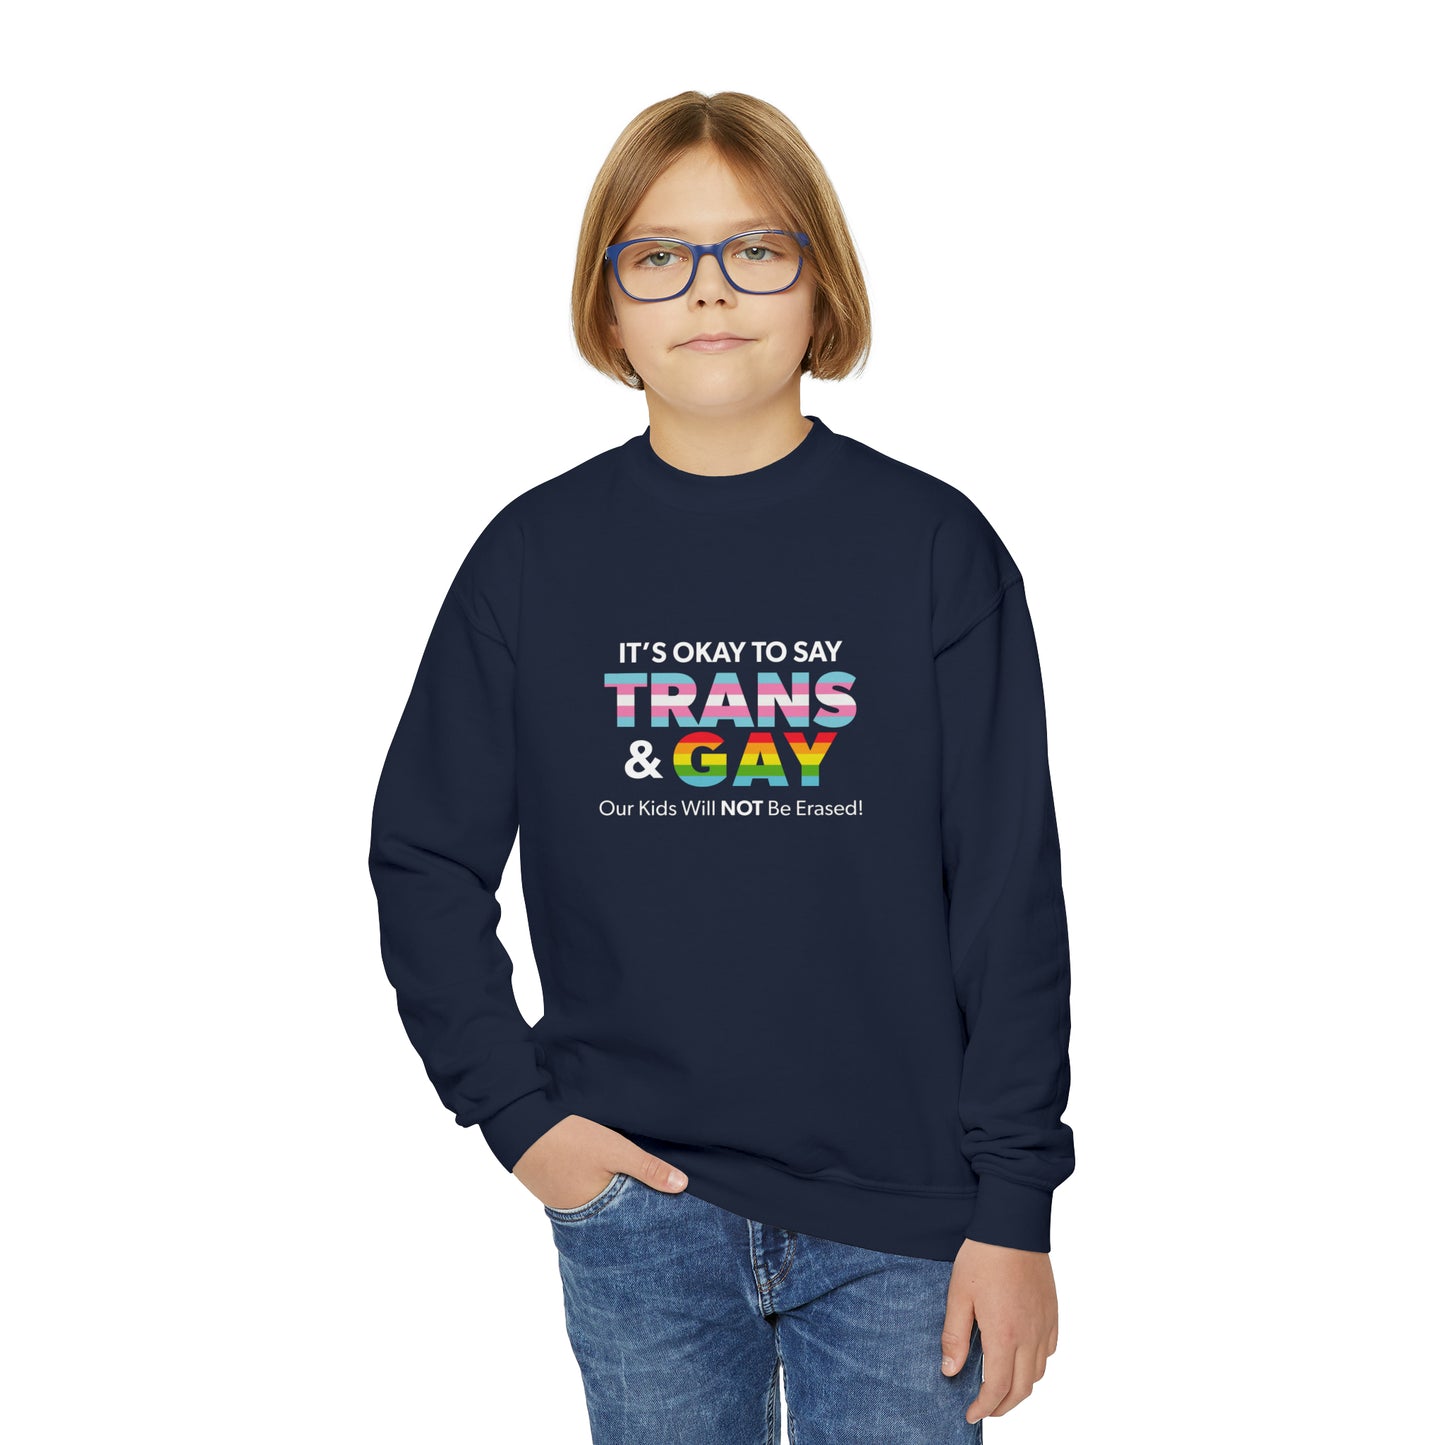 "It’s Okay to Say Trans & Gay" Youth Sweatshirt